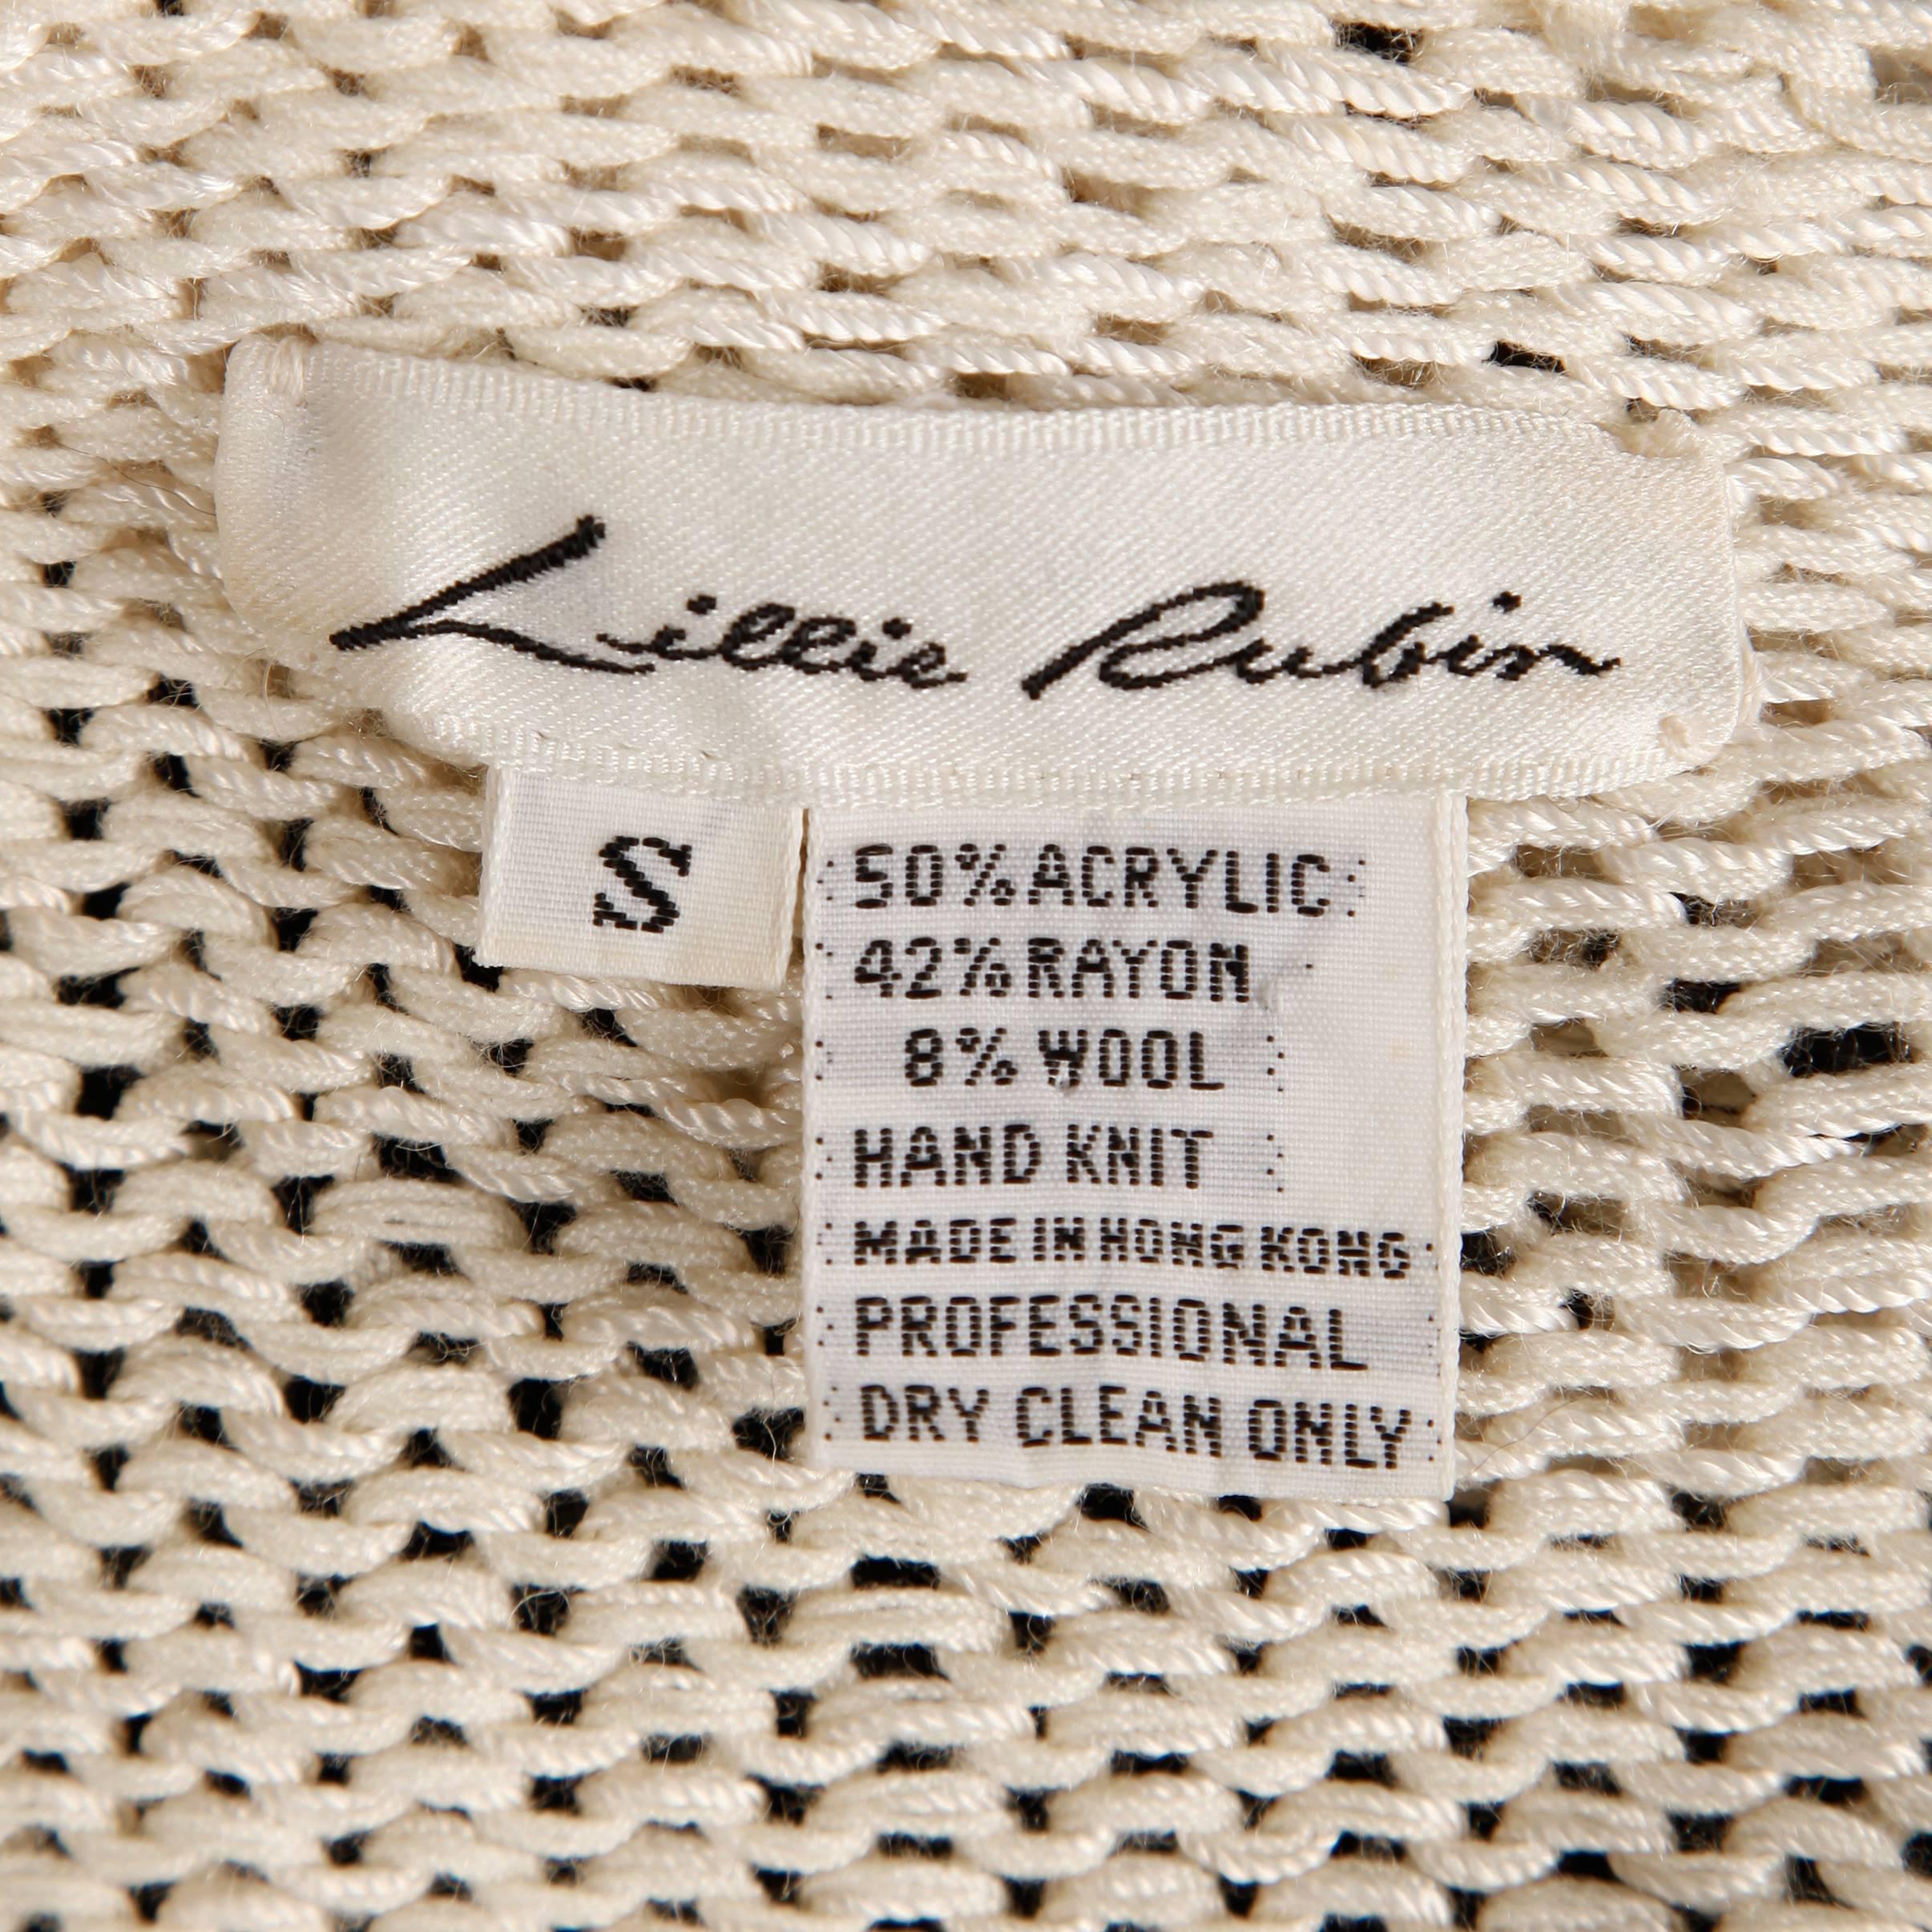 Black Lillie Rubin Vintage Hand-Knit Chevron Zig Zag Beaded Sweater Top